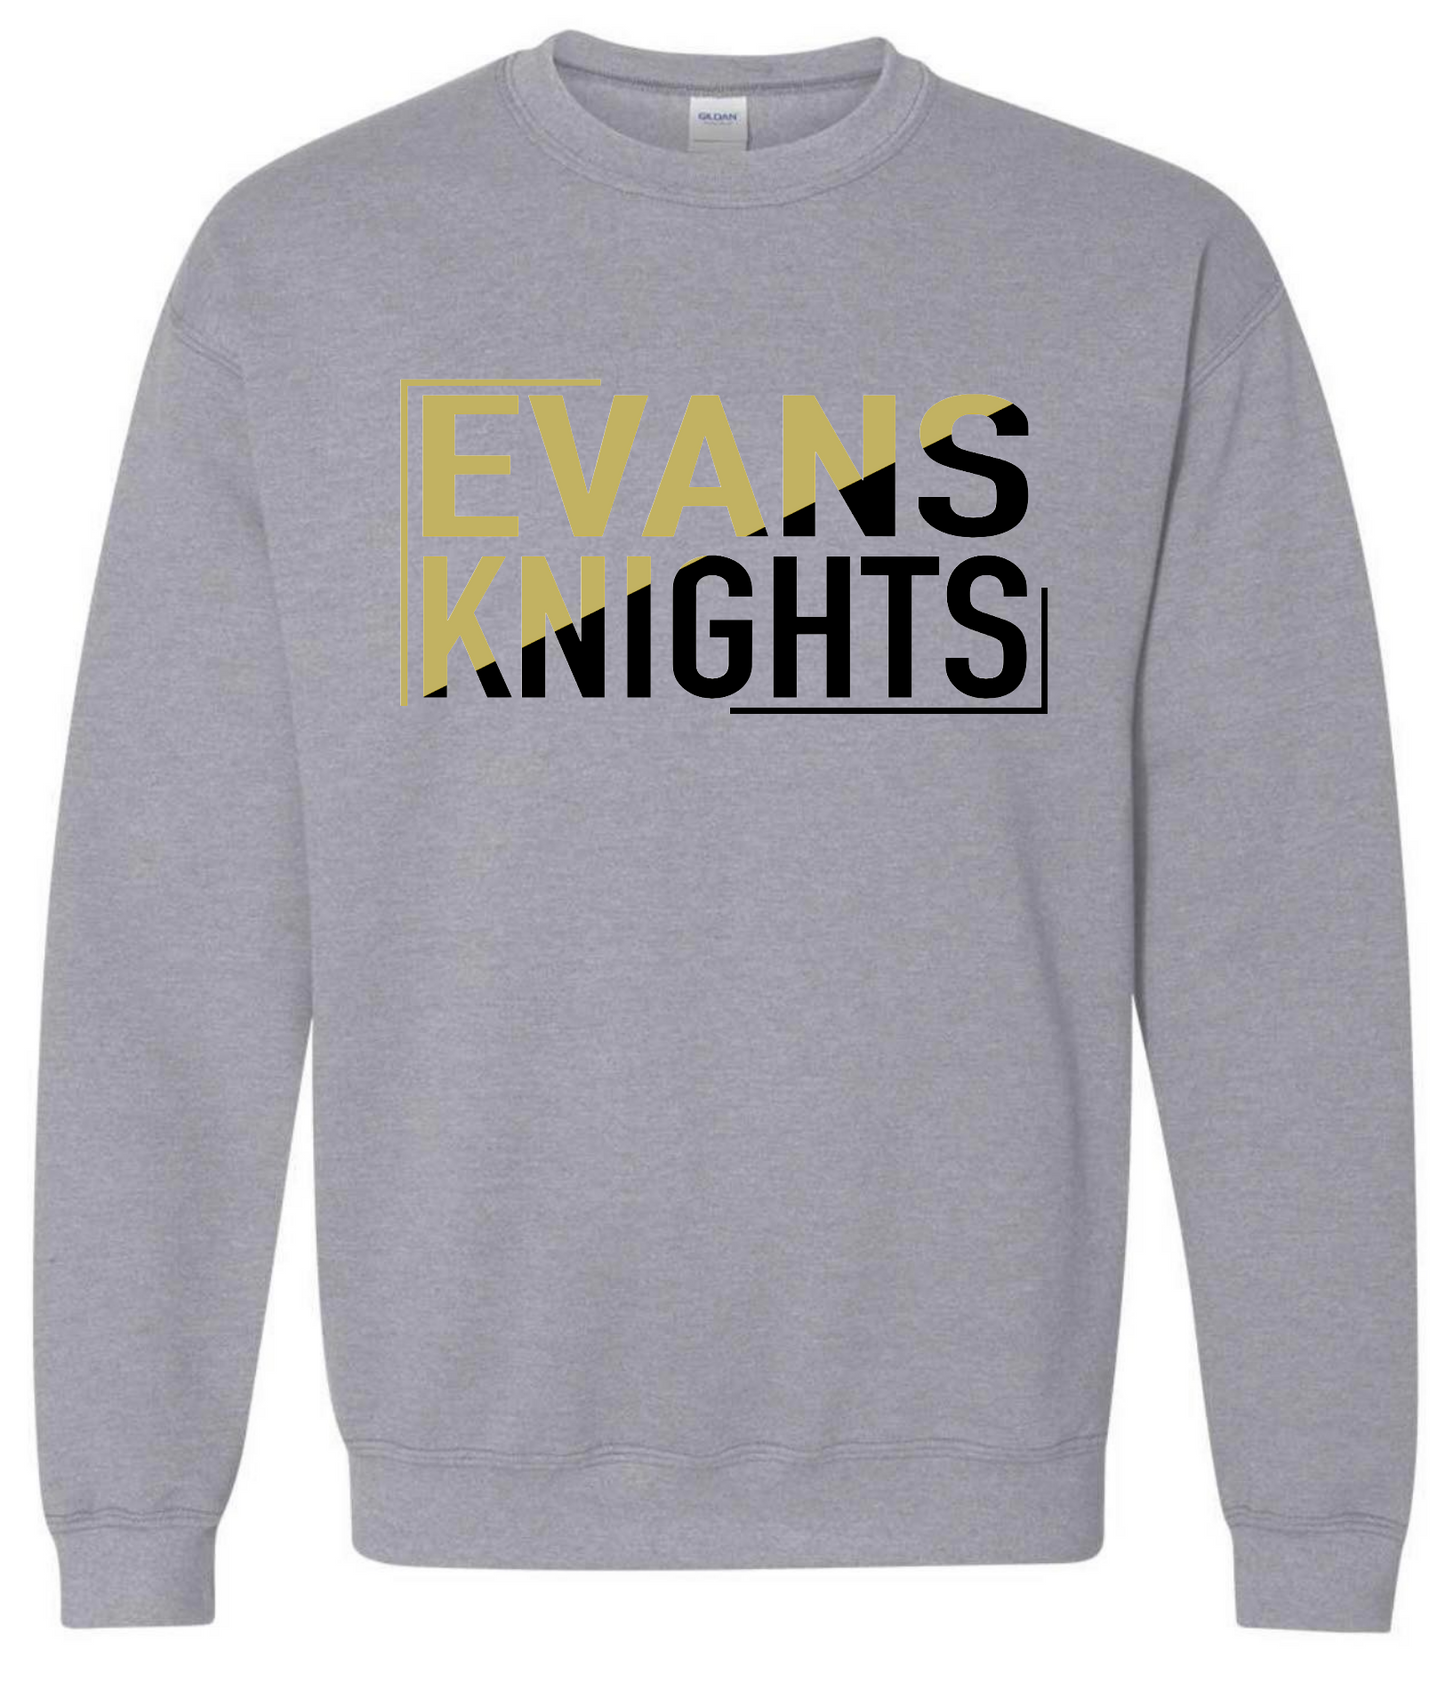 Evans Knights Split Color Sweatshirt